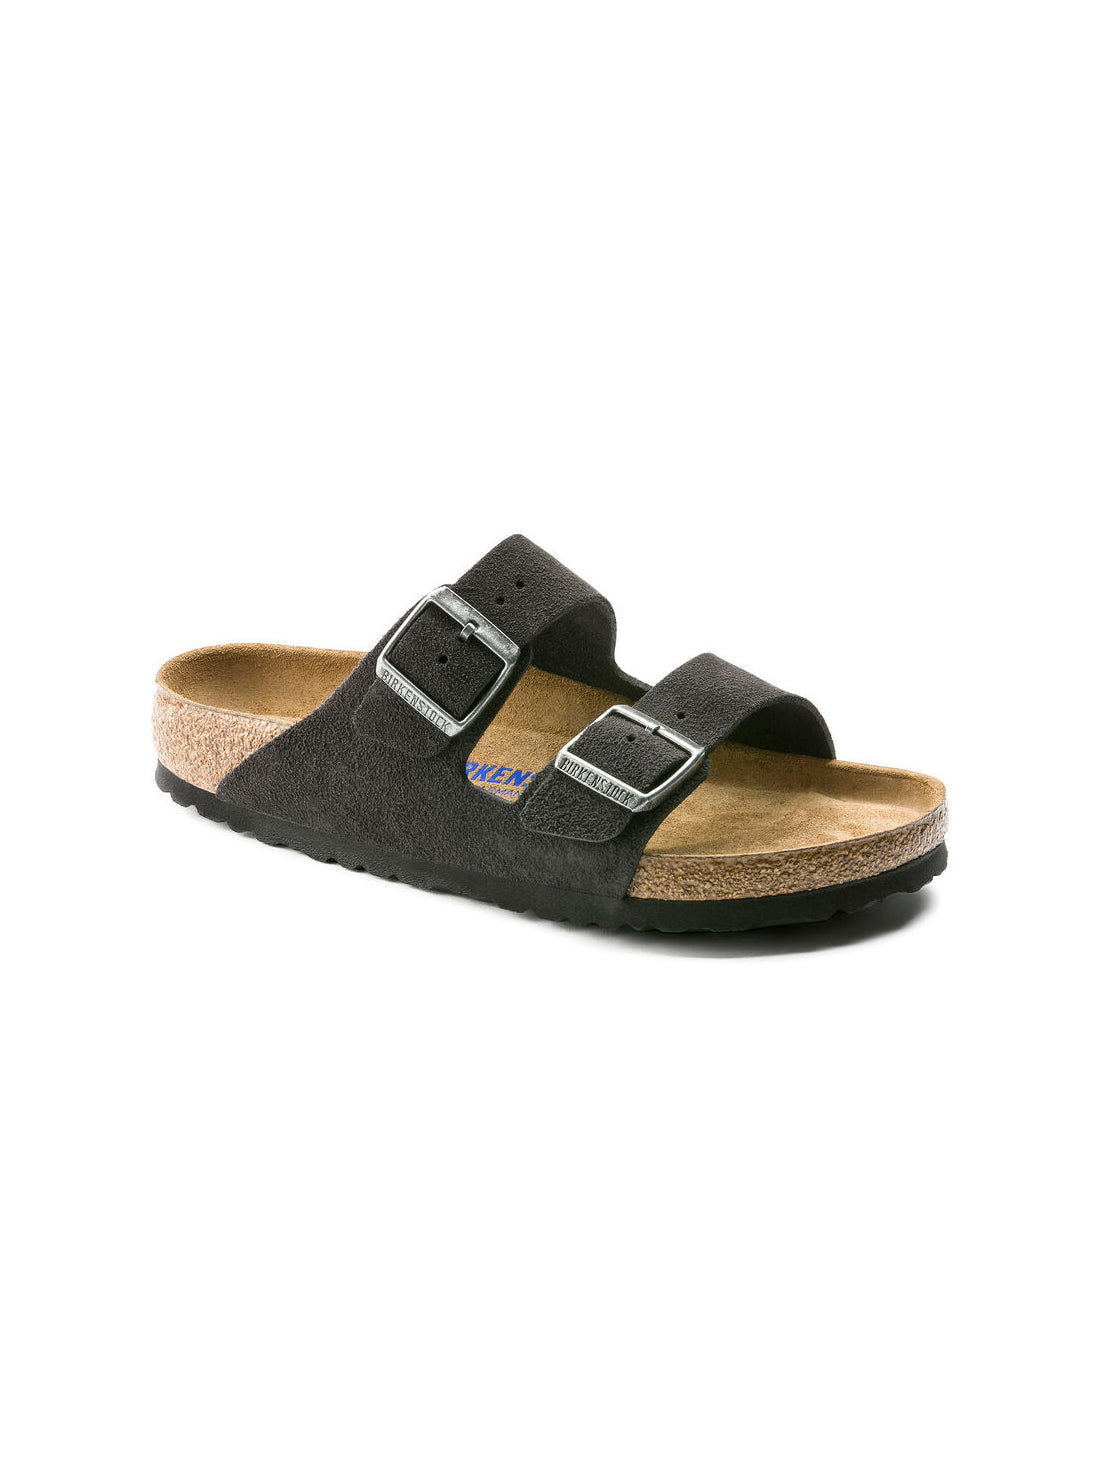 birkenstock arizona soft footbed sandal in suede leather velvet gray regular